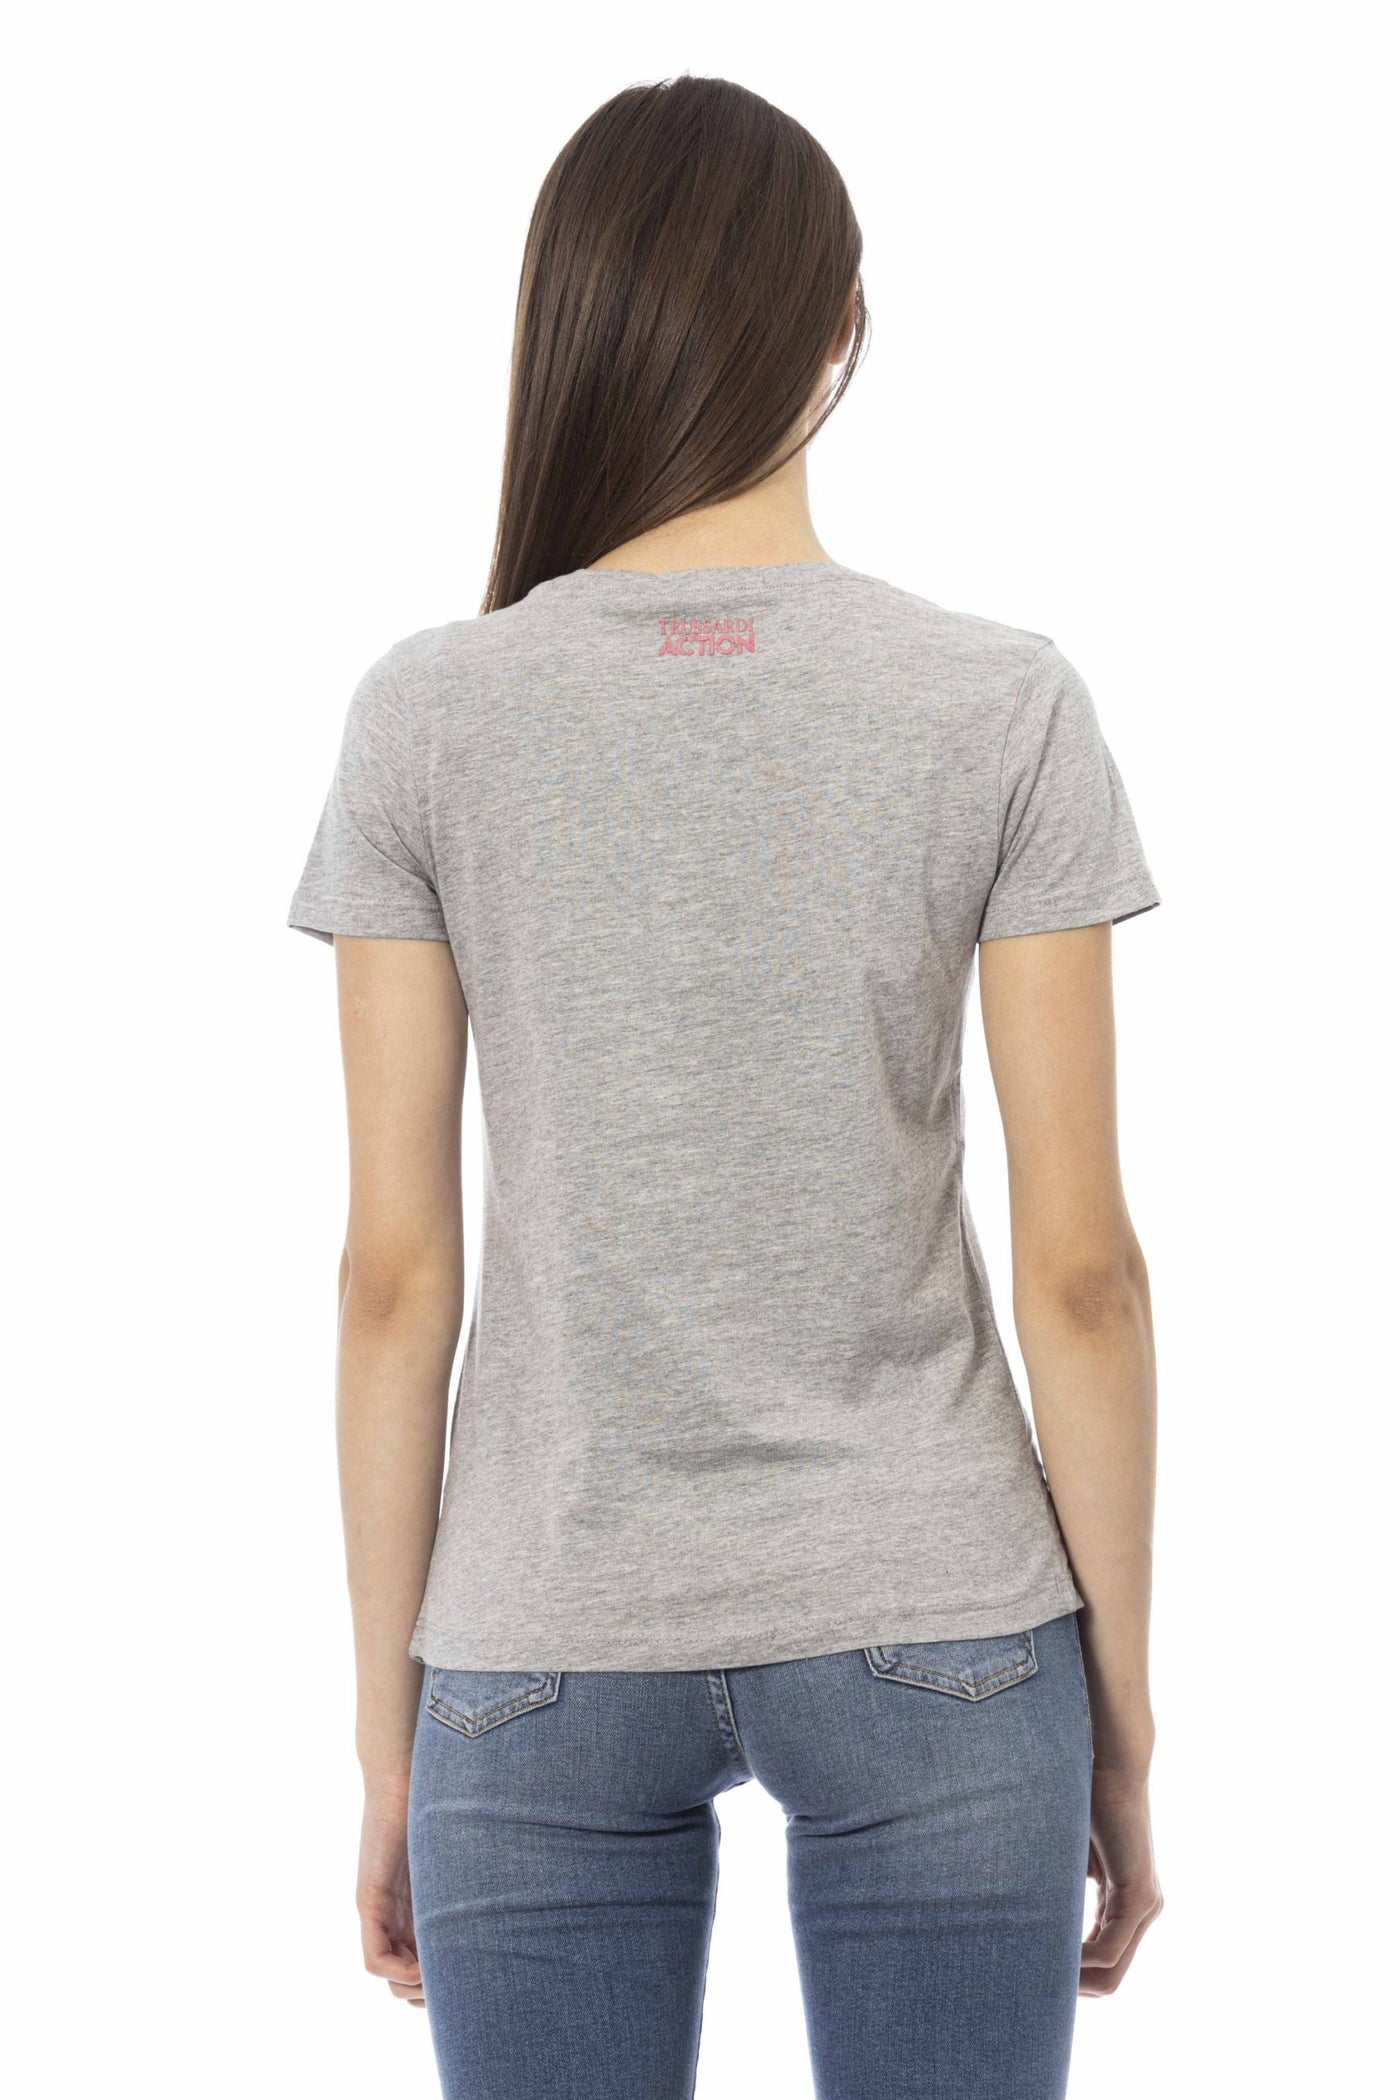 Trussardi Action Gray Cotton Tops & T-Shirt